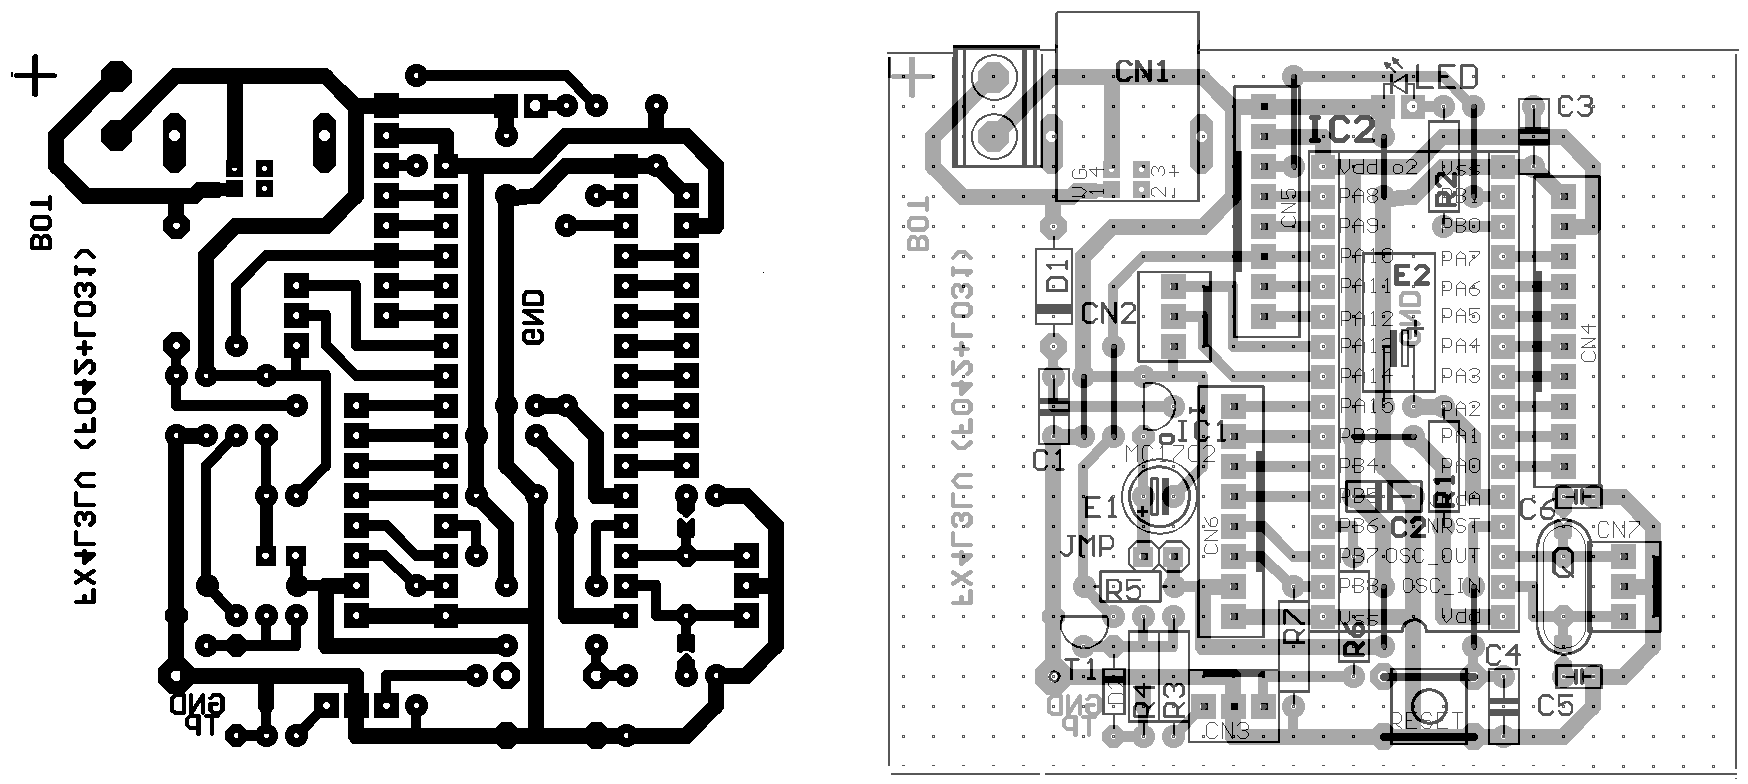 F042 LQFP32 pcb layout drawing